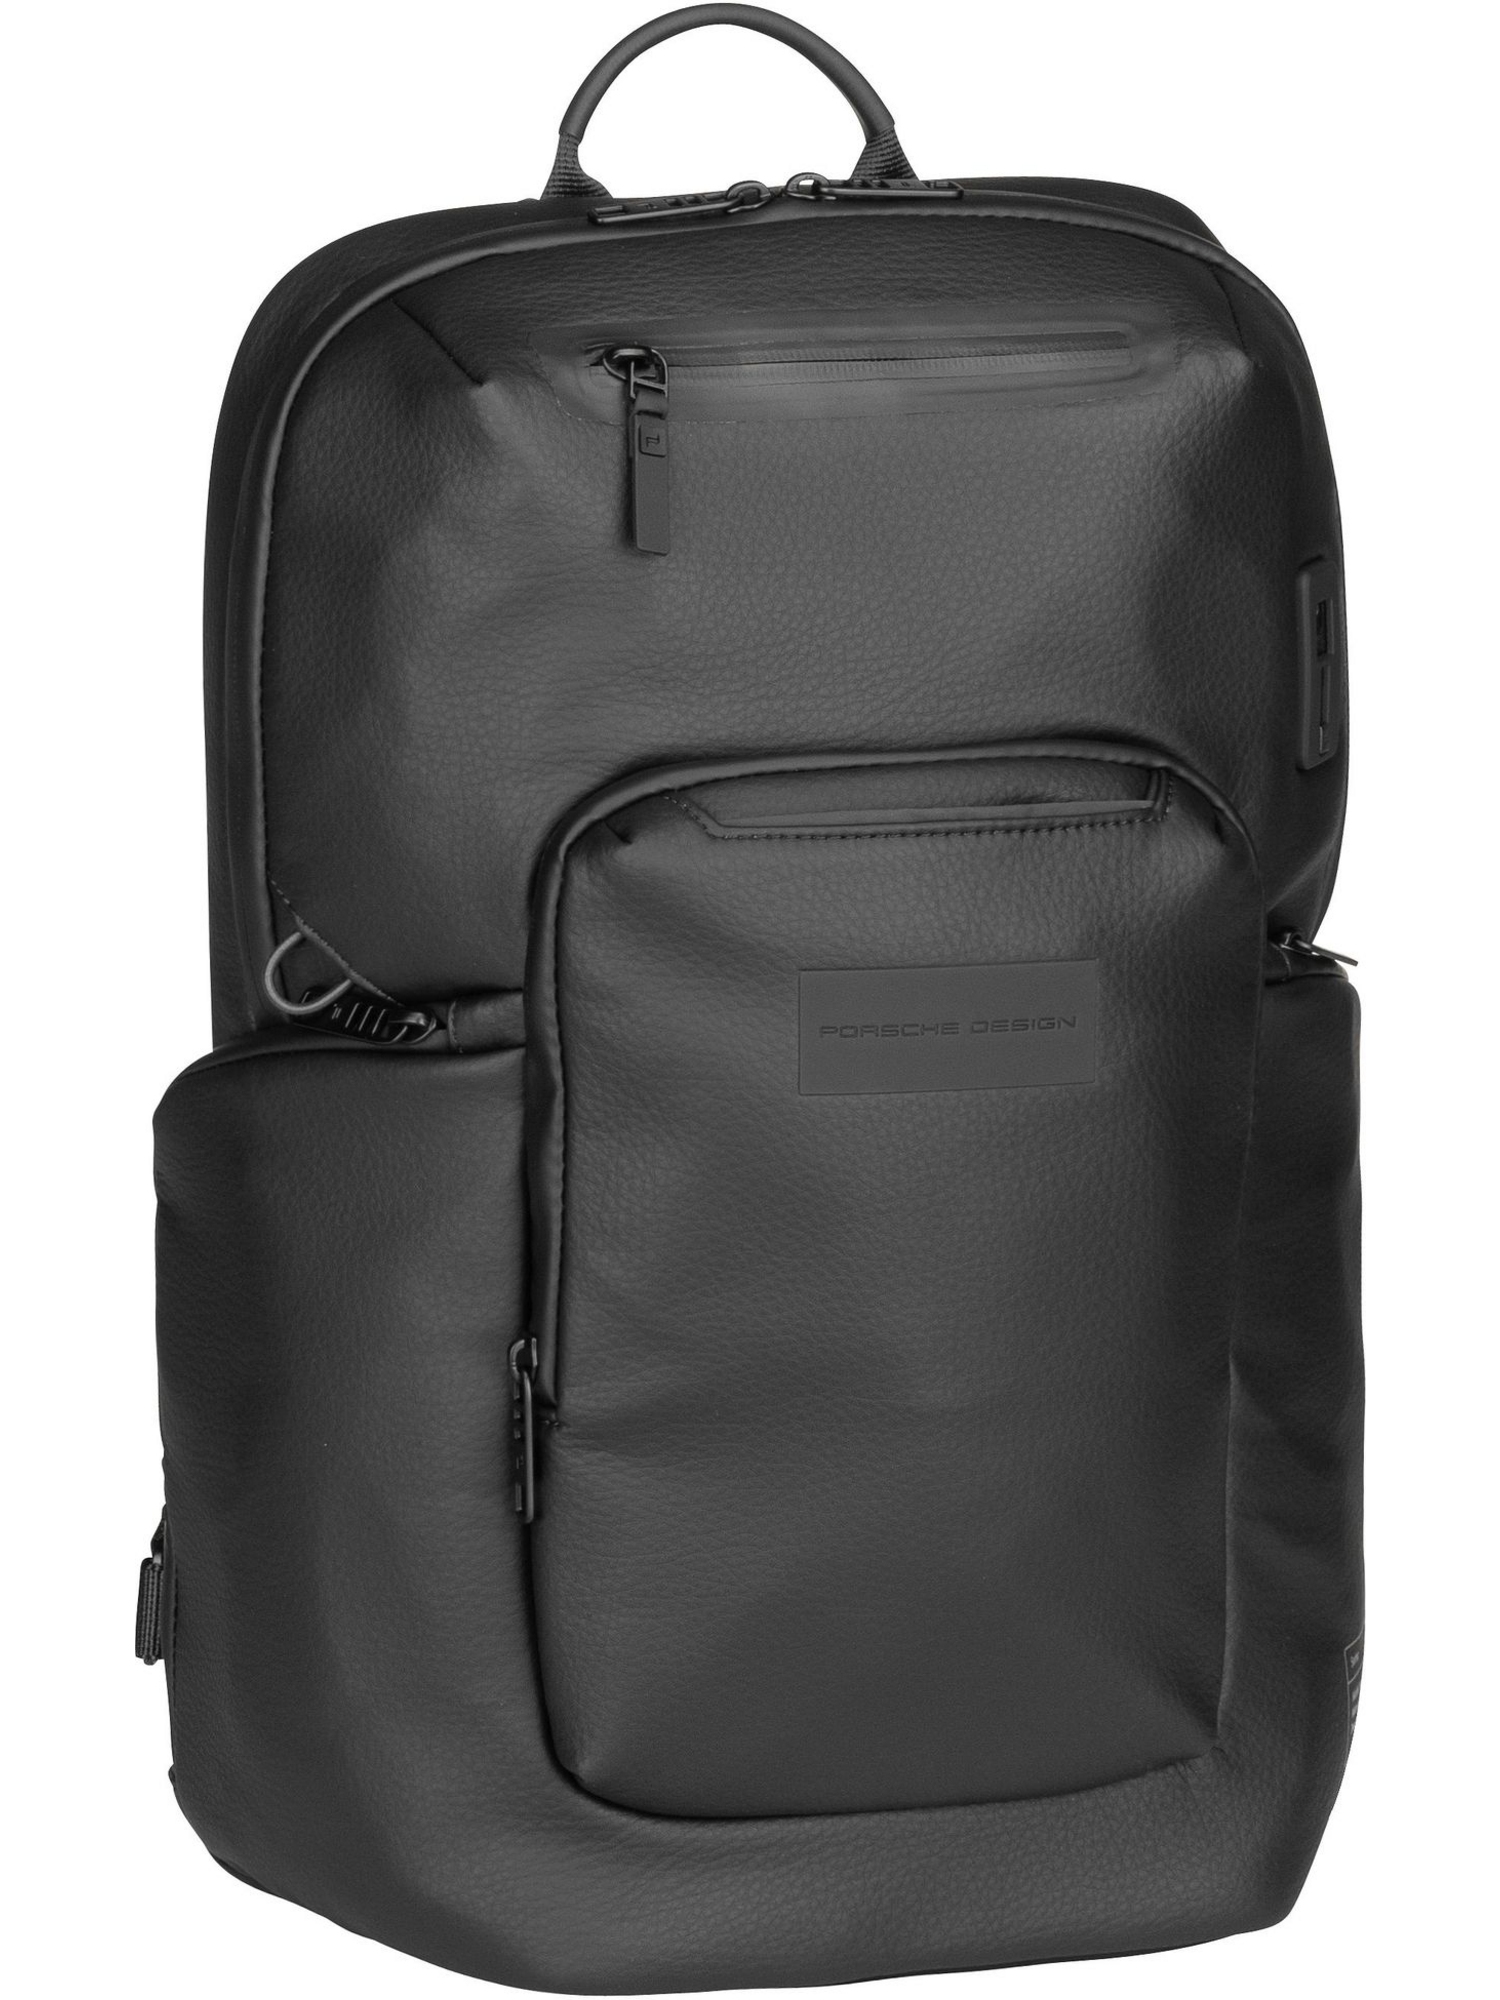 рюкзак urban porsche design цвет black Рюкзак Porsche Design/Backpack Urban Eco Leather Backpack S, черный